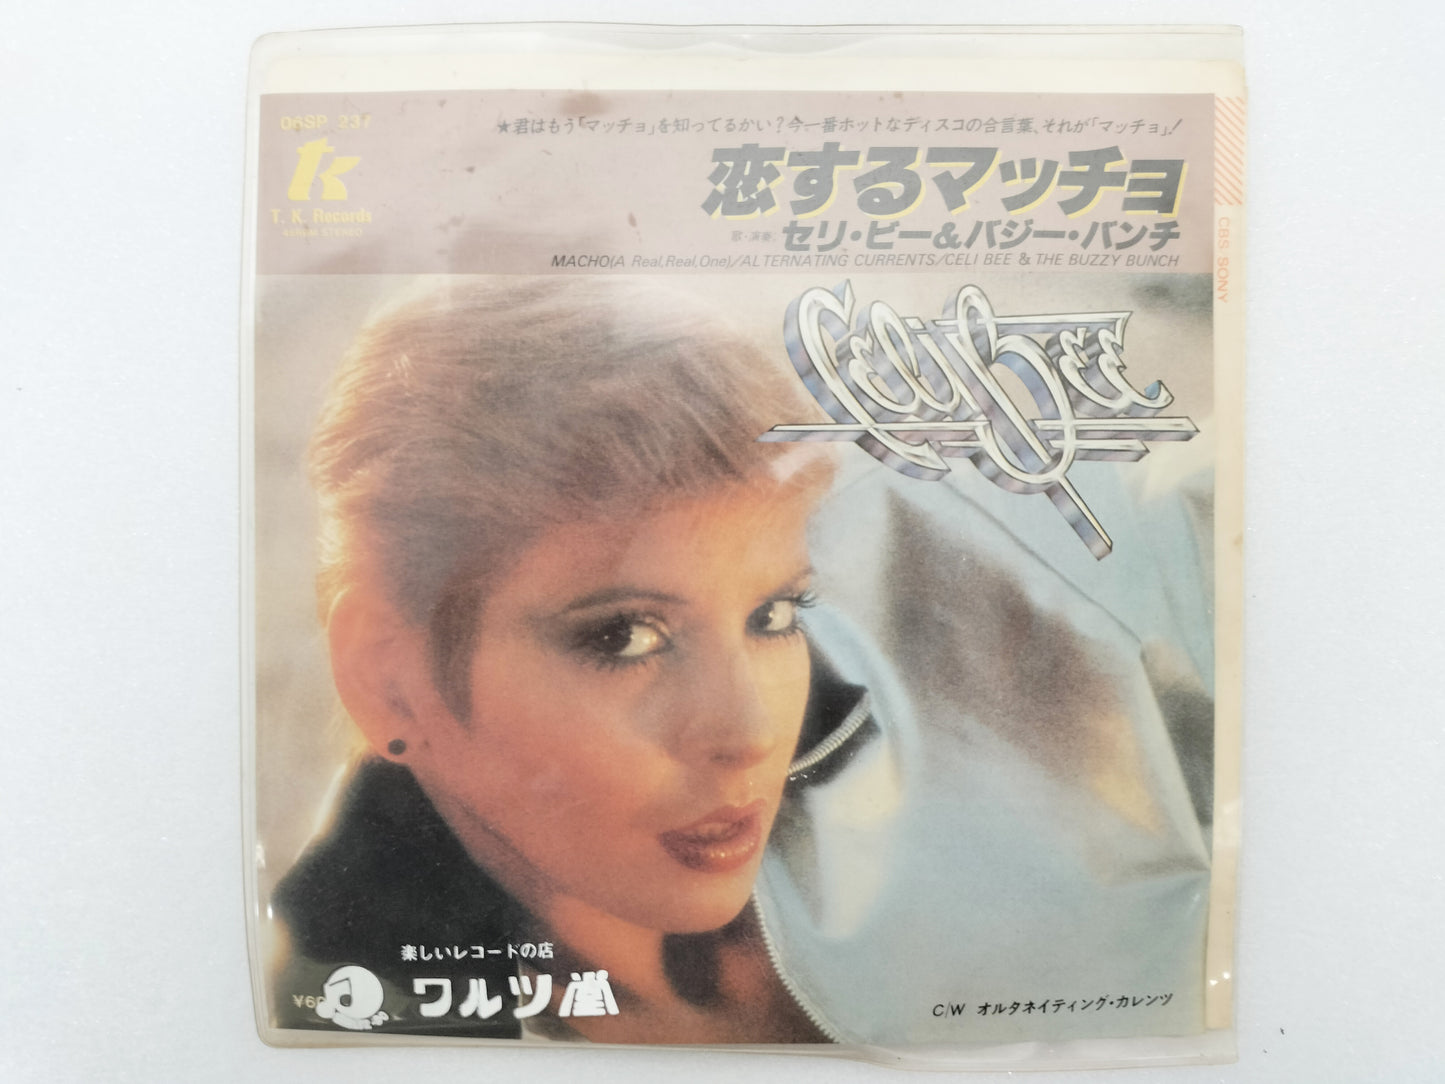 1978 Koi Suru Macho Seri Bee & Buzzy Bunch B: Alternating Currents Japanese record vintage